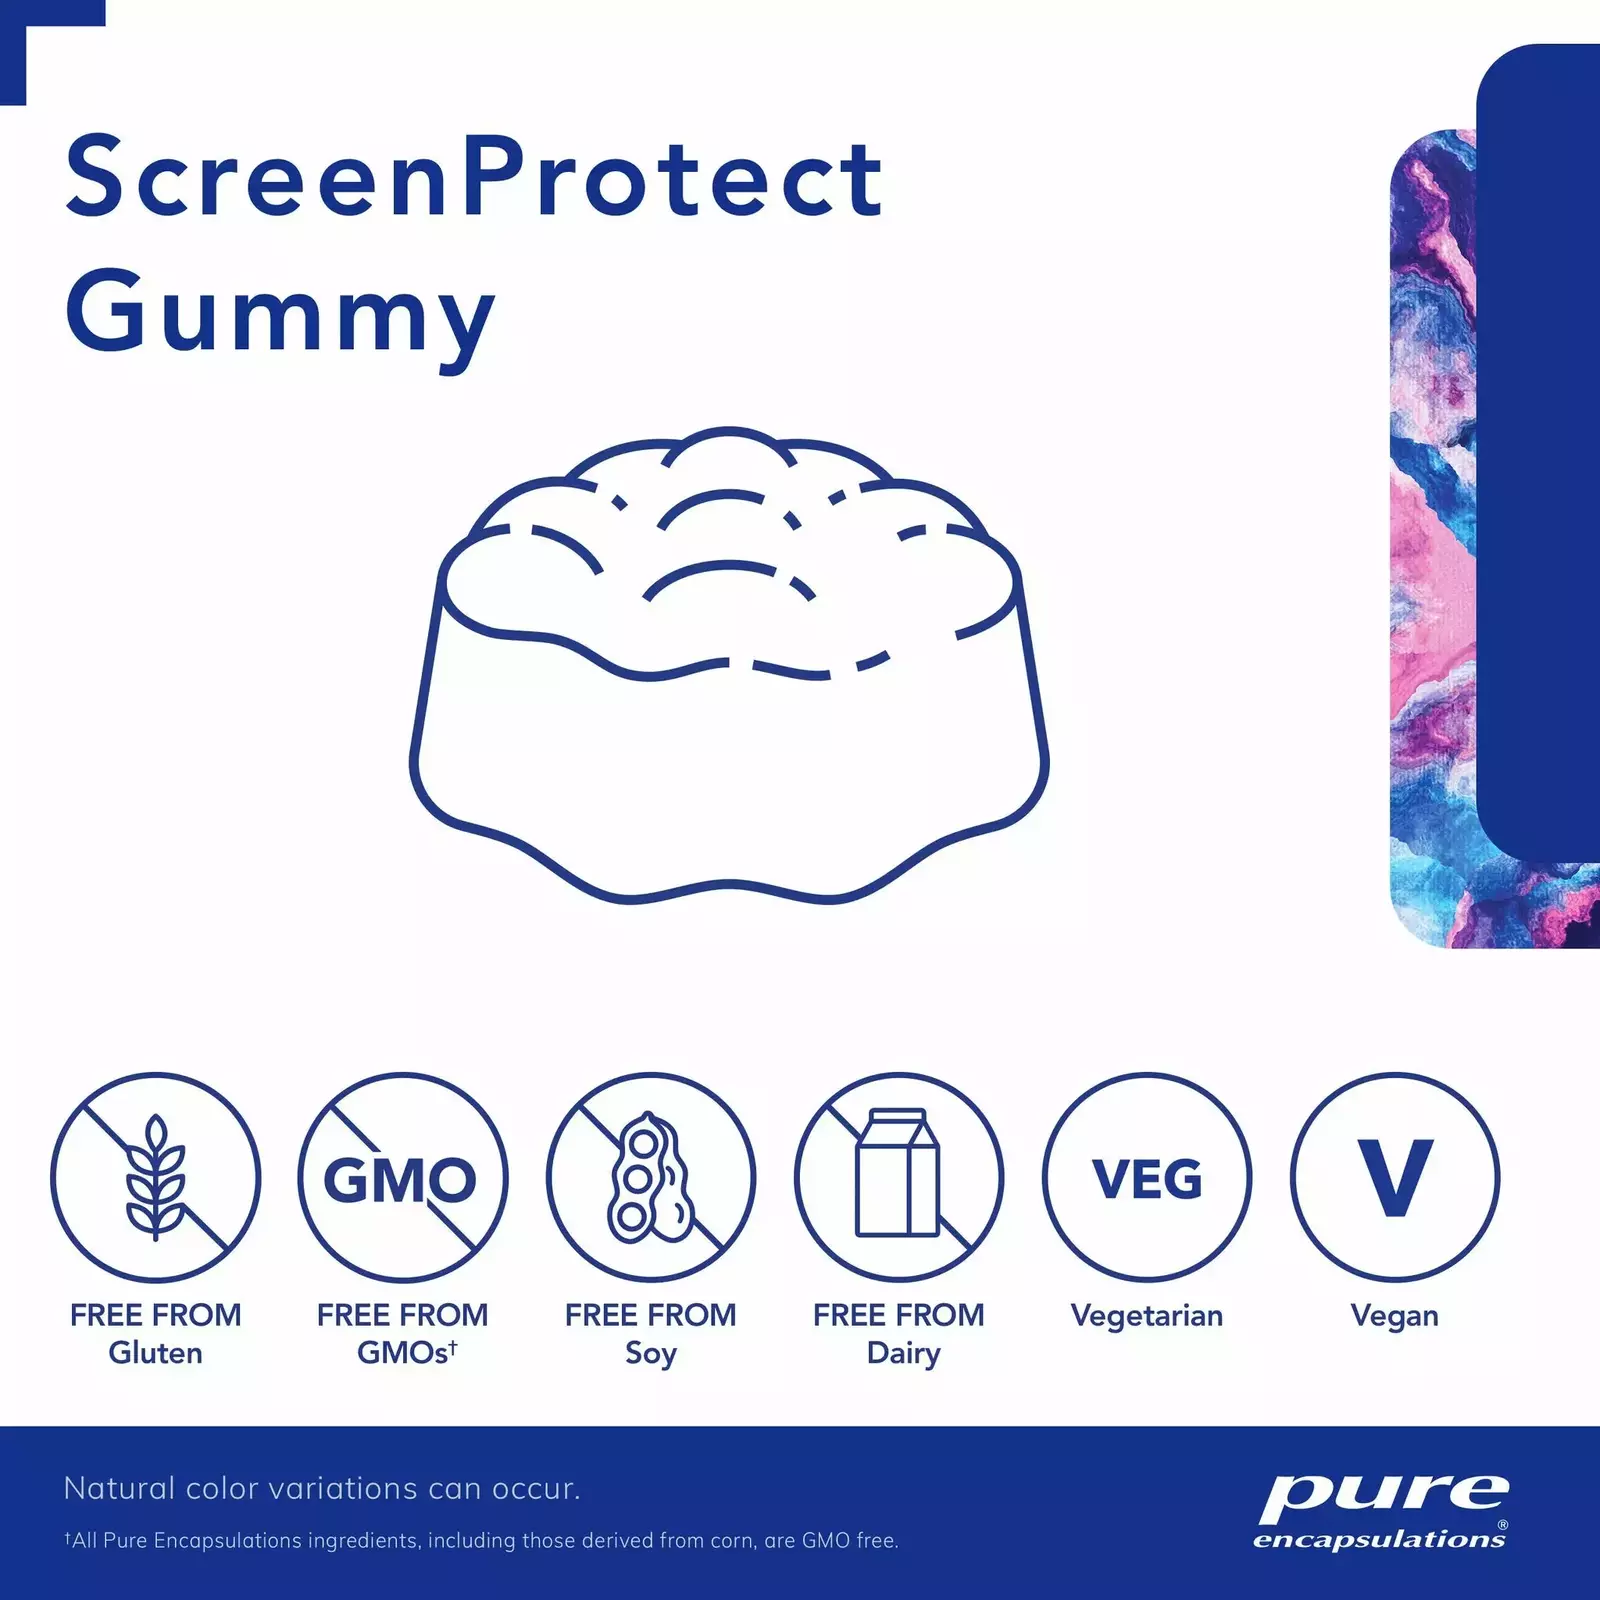 ScreenProtect Gummy